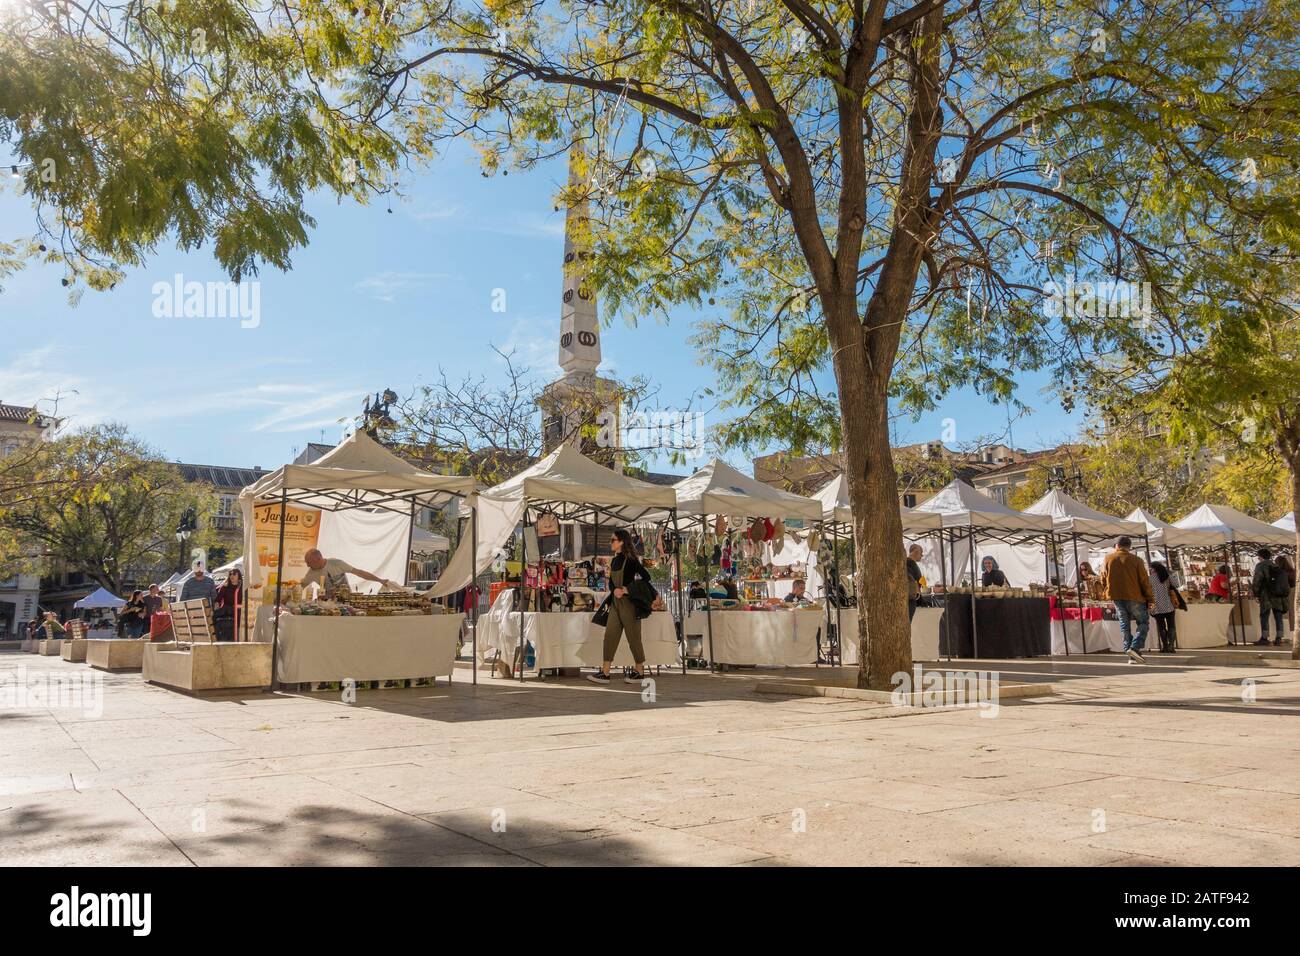 Malaga Spain. Local market stalls at Plaza de la Merced (Mercy Square) with the Monument to Torrijos, public square, Malaga, Andalucia, Spain. Stock Photo